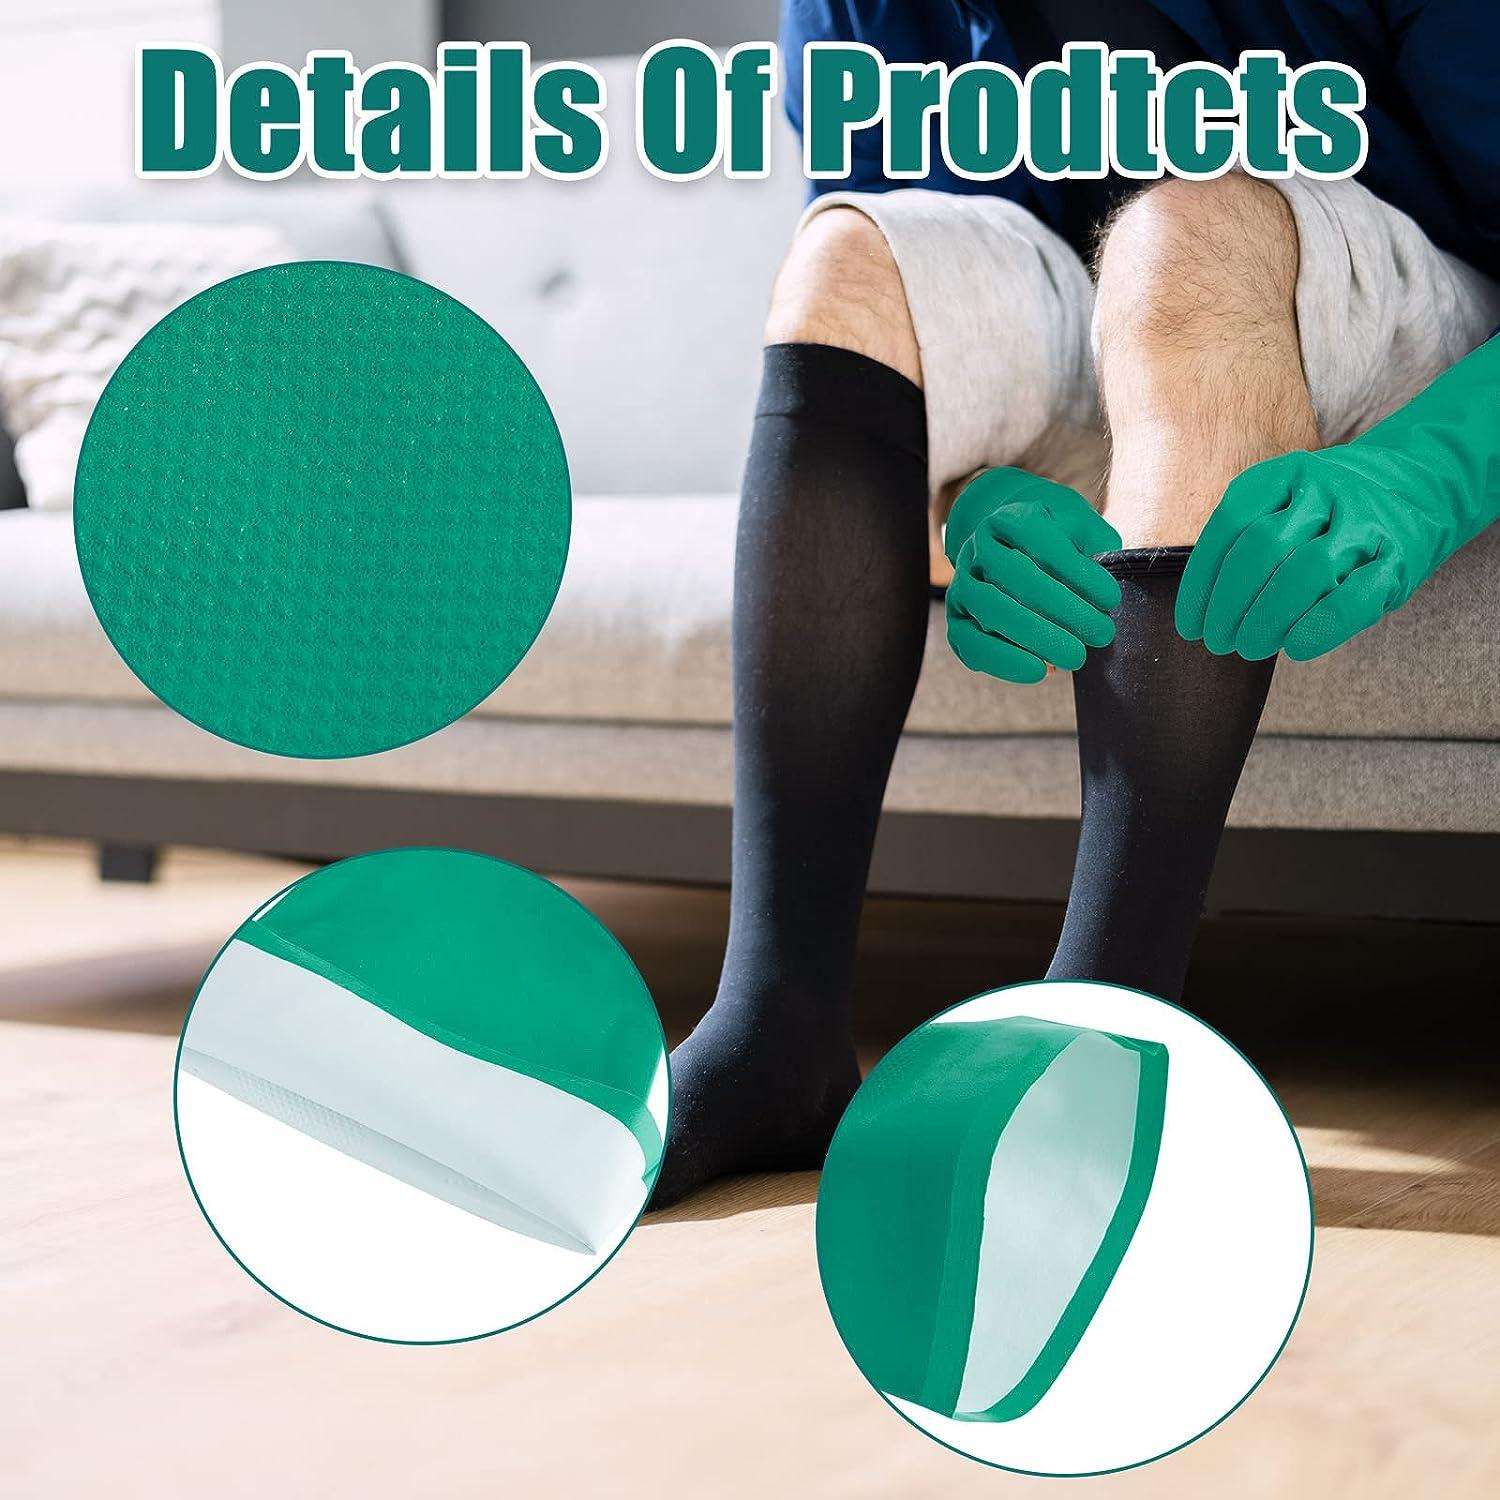 HBP Compression Socks - Damidols